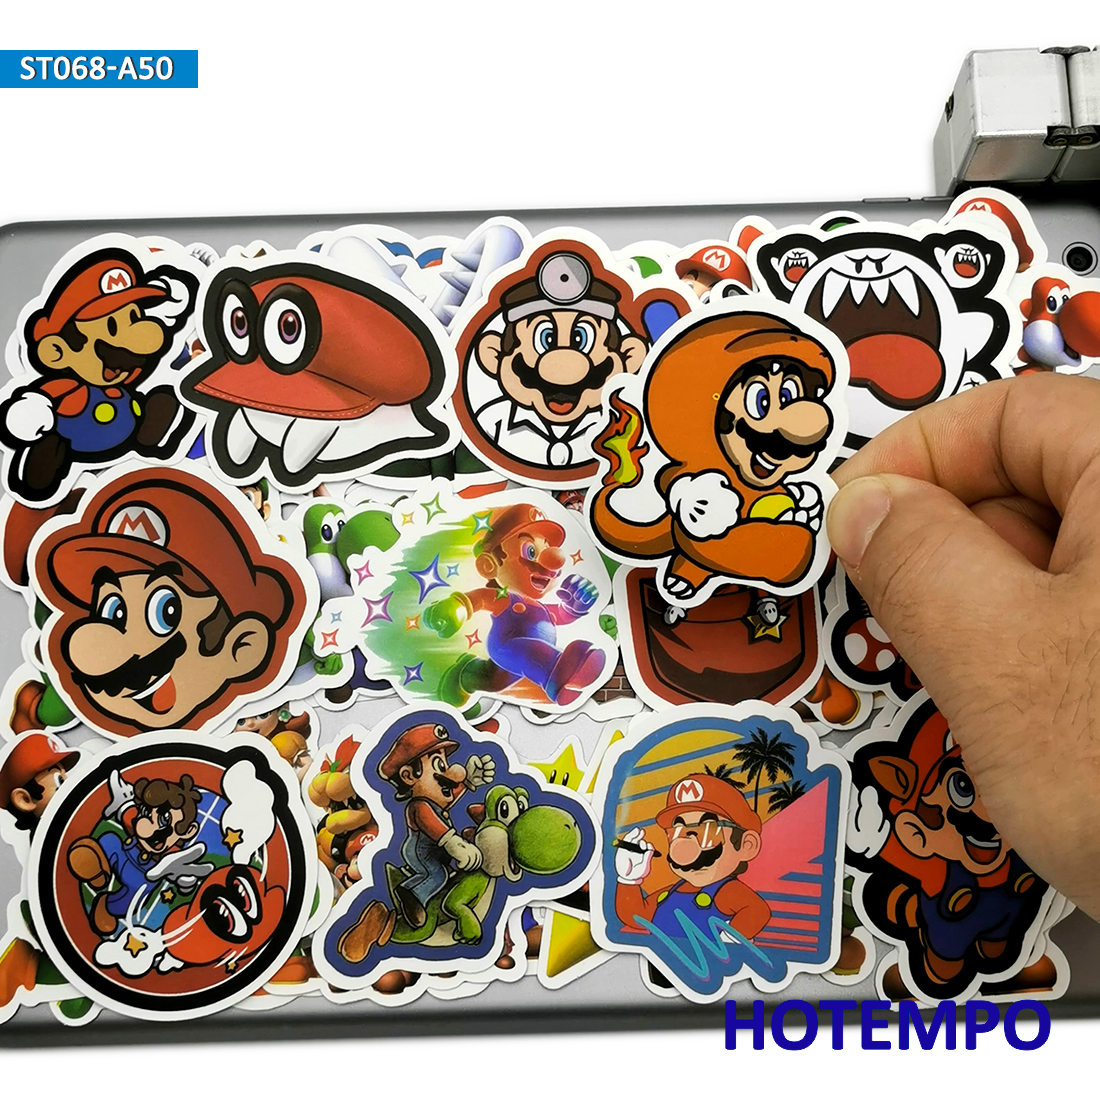 100Pcs Game MARIO Cartoon Stickers Vinyl Decals Skateboard Luggage Laptop Car 